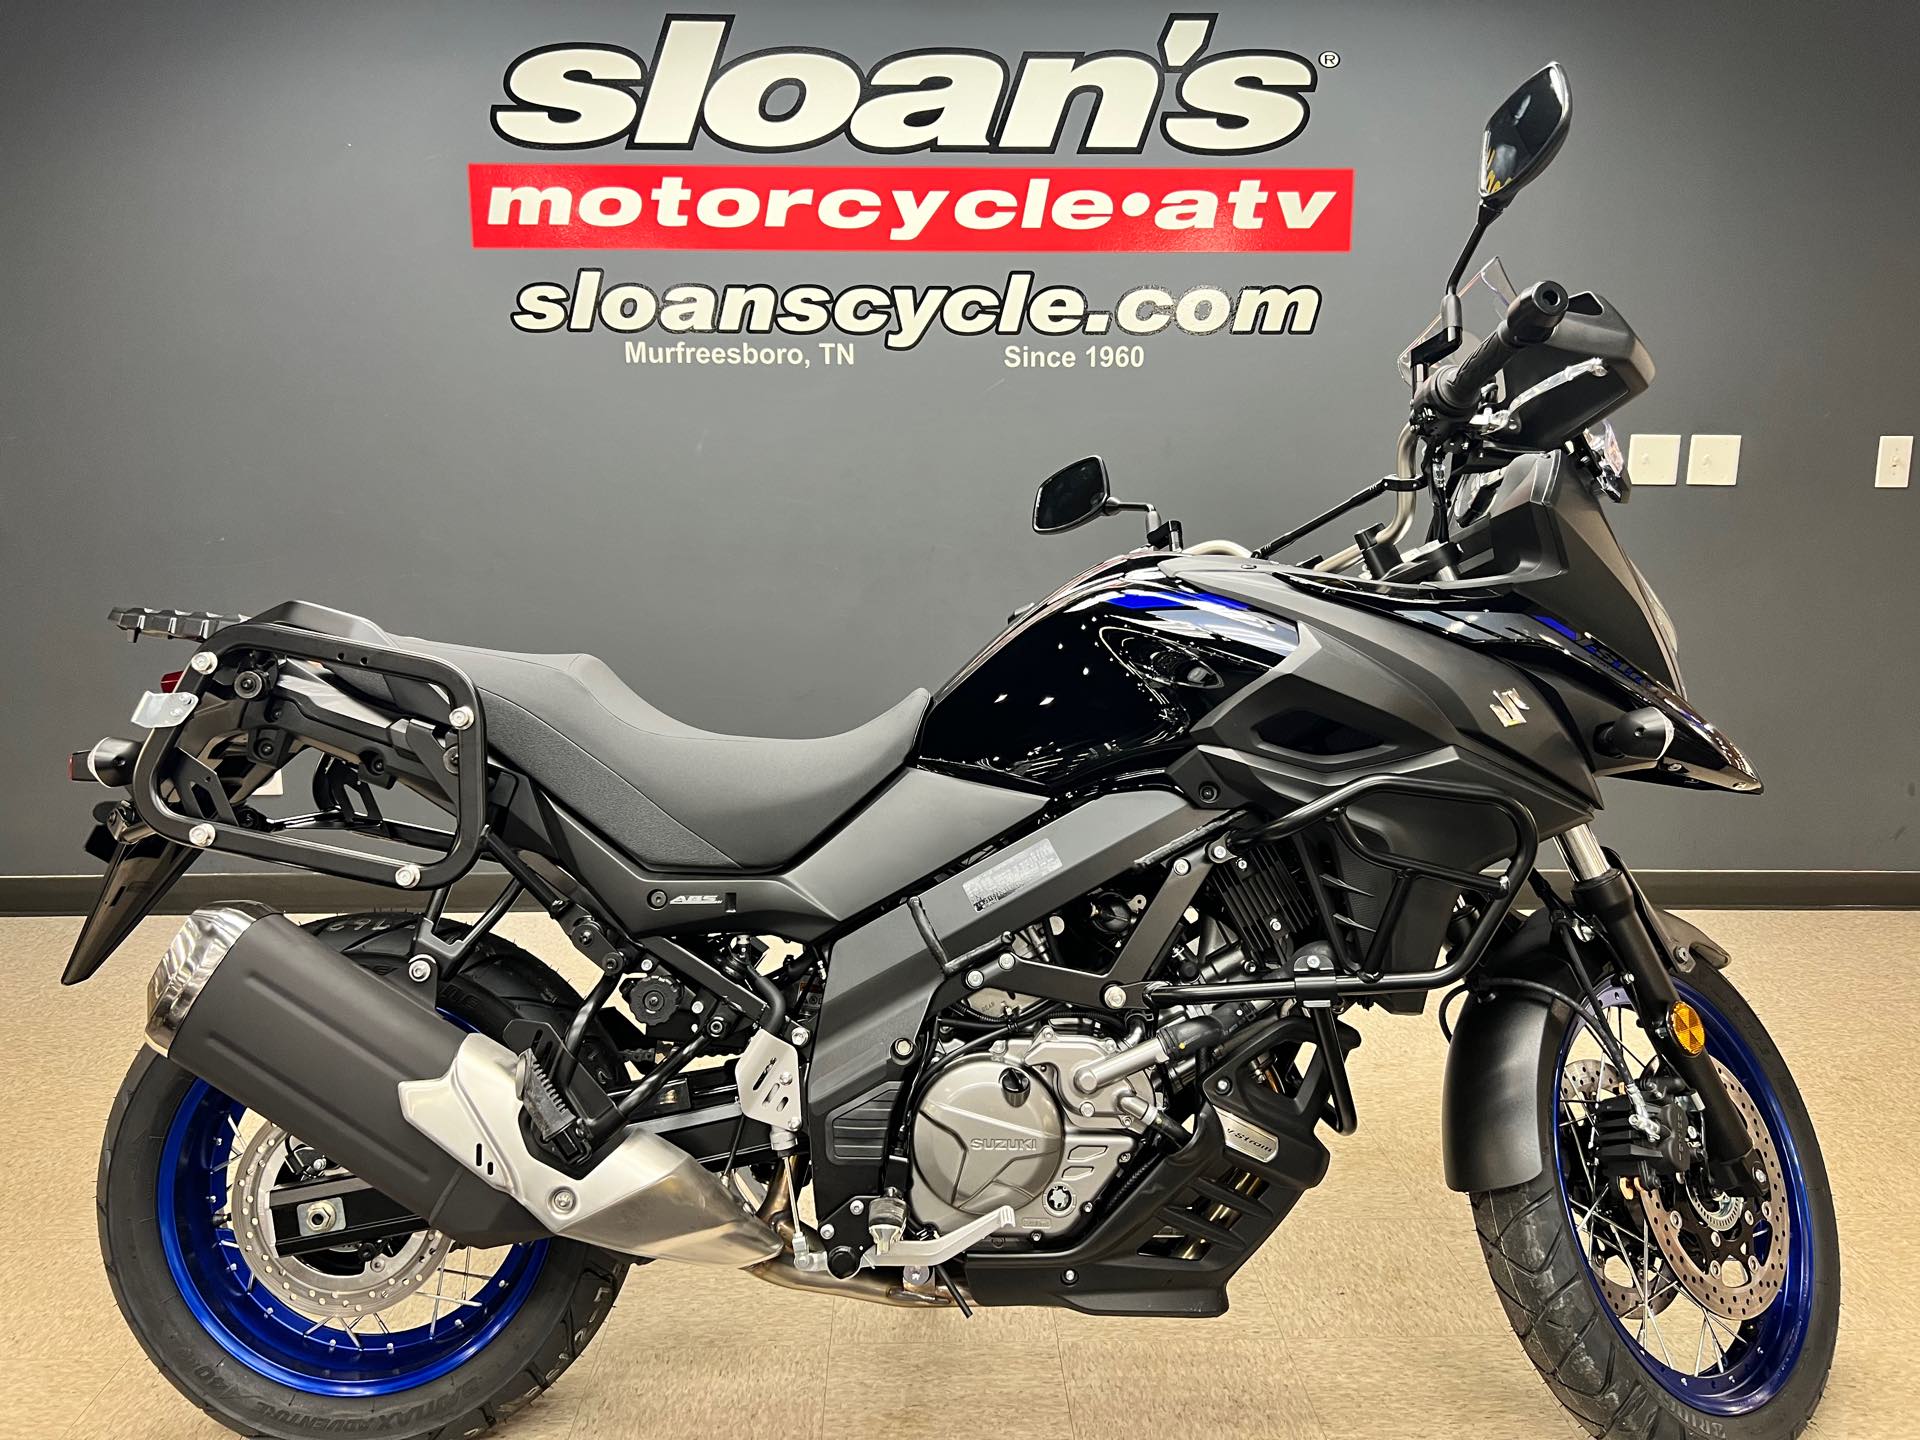 2022 Suzuki V-Strom 650XT Adventure at Sloans Motorcycle ATV, Murfreesboro, TN, 37129